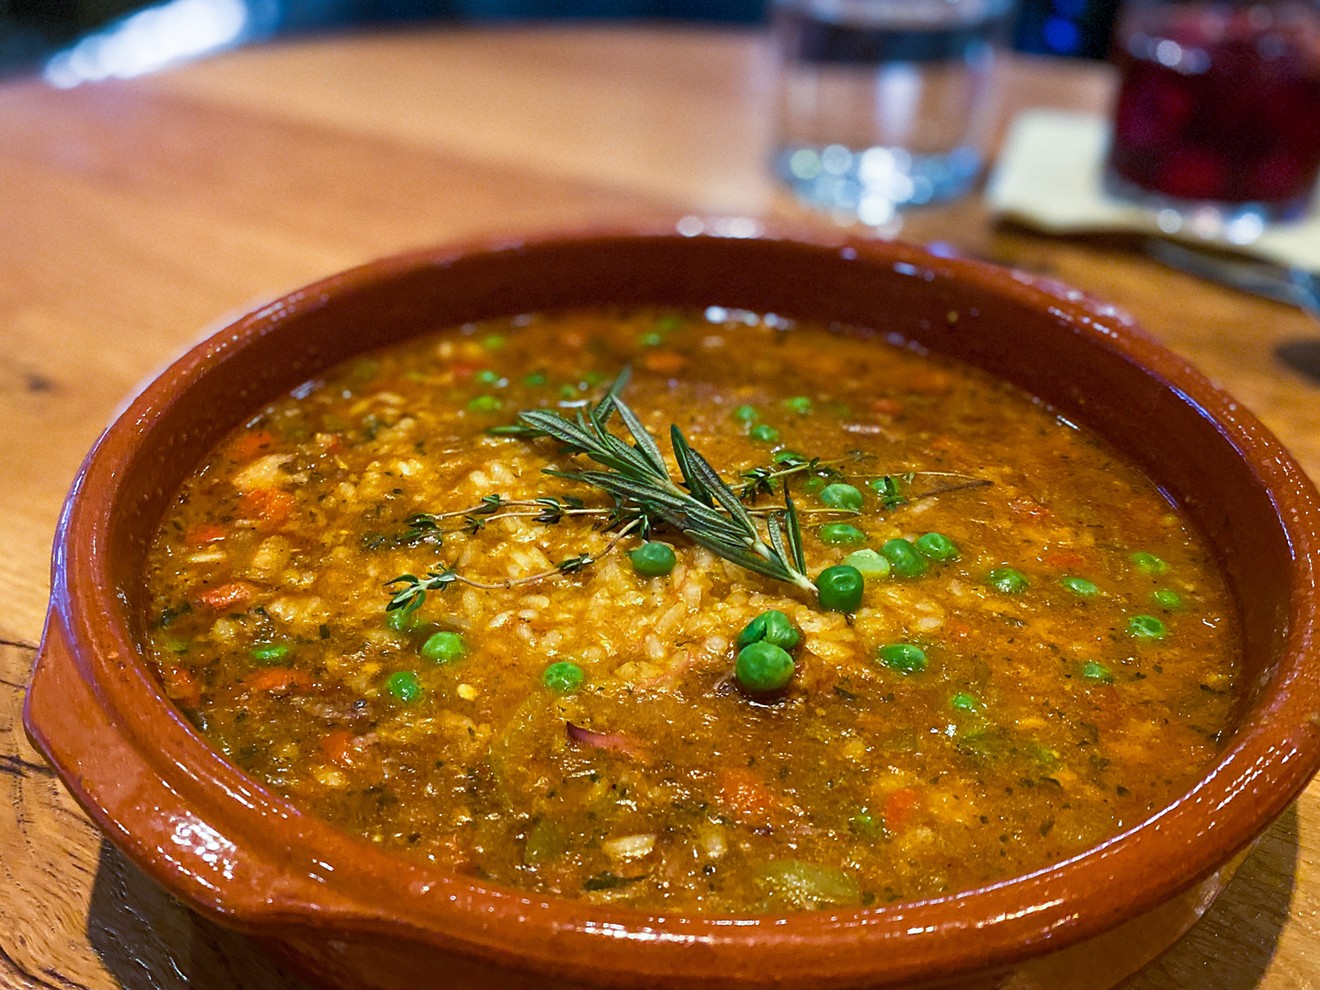 Braised brisket caldoso: Valencia style rice, beef, sofrito, piquillo confit, peas and chickpeas.